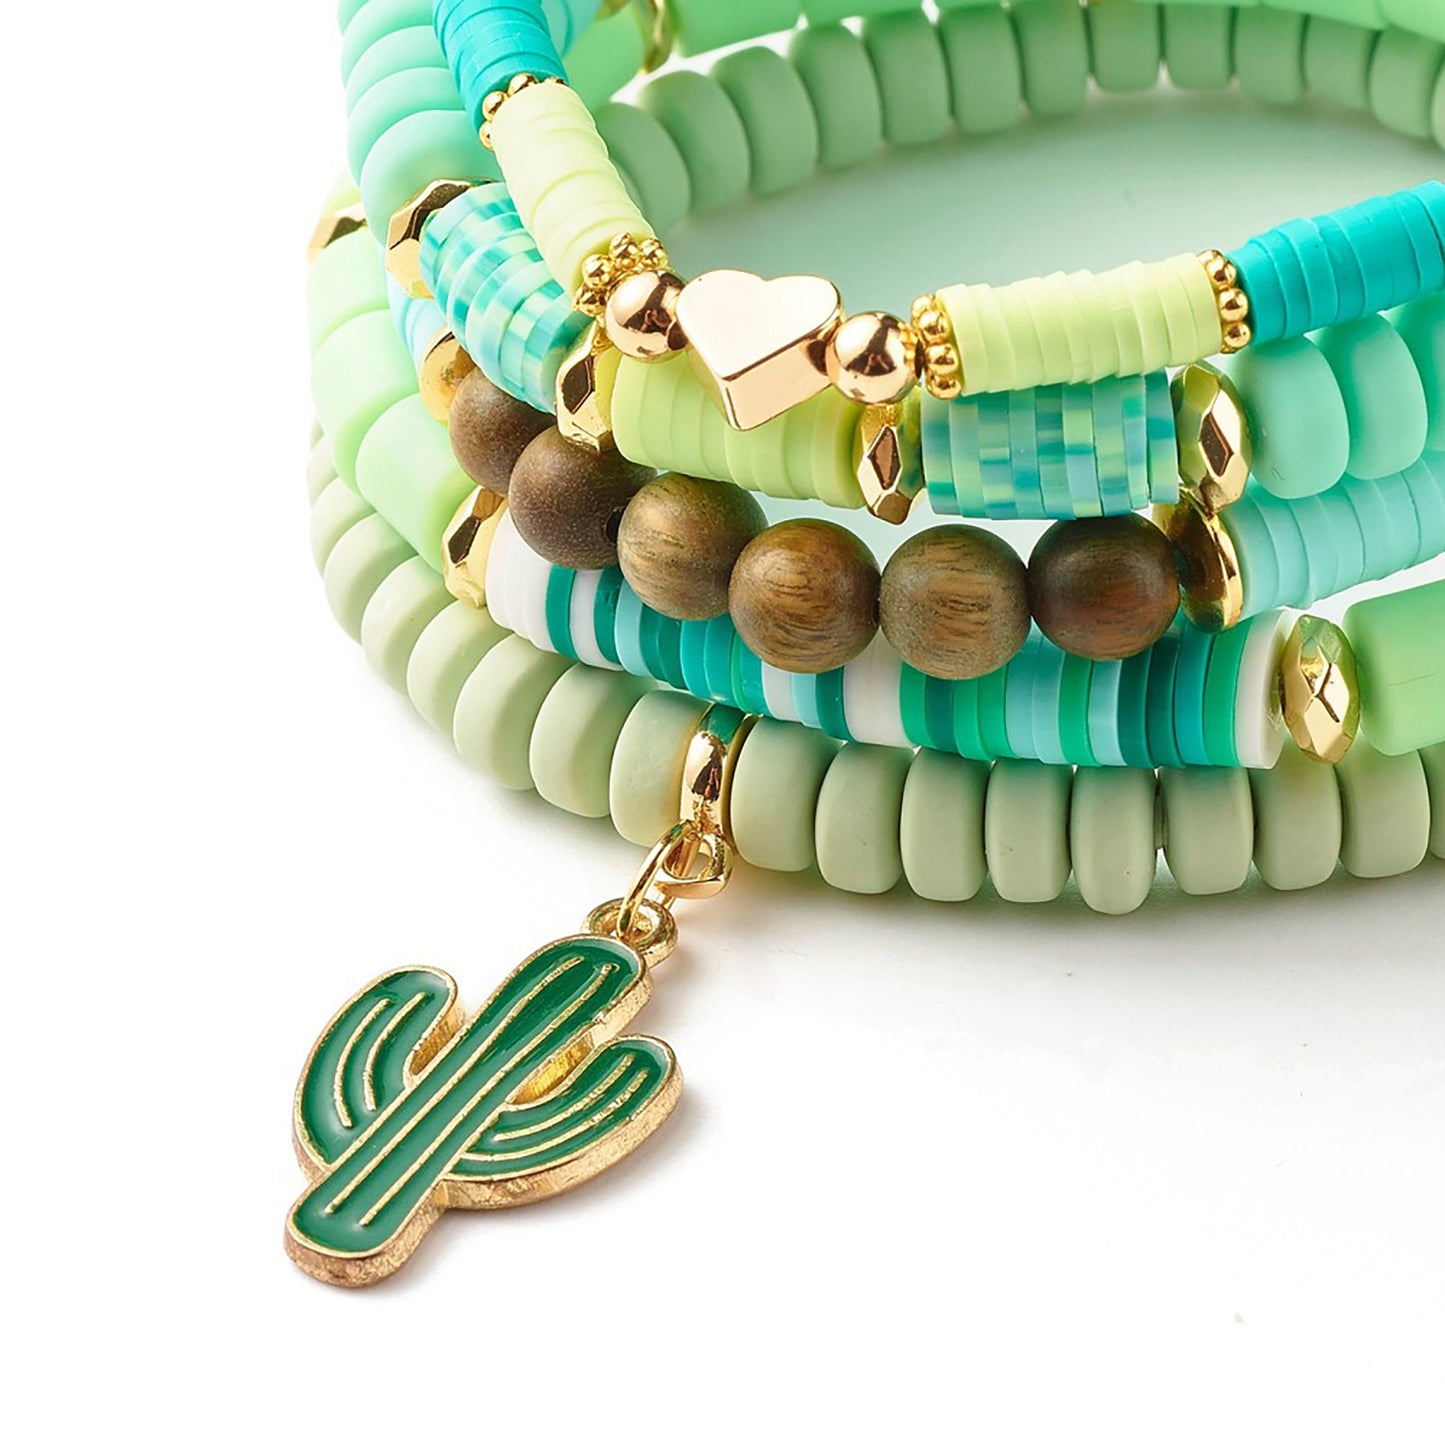 Beaded Stretch Bracelet for Women Beach Jewelry - Set of 5 Bracelets with Cactus charm